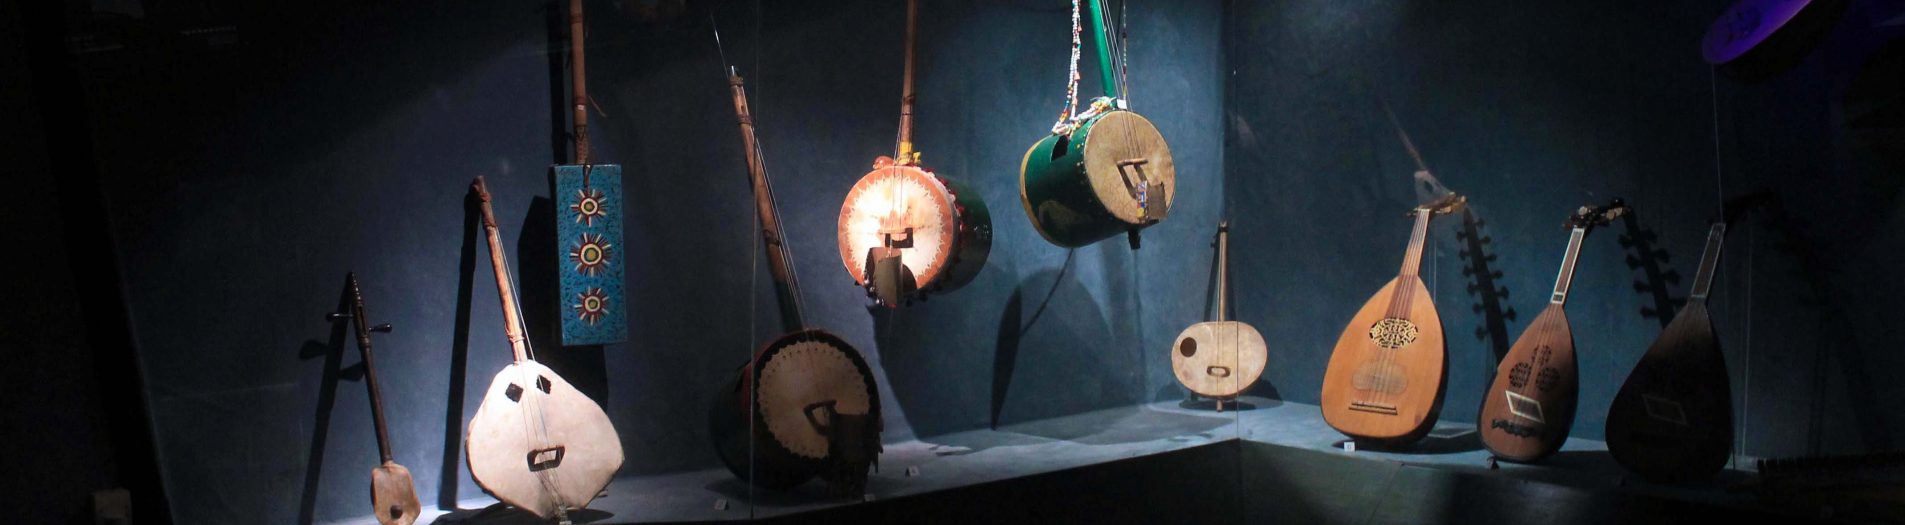 Des instruments de musique de la Tunisie